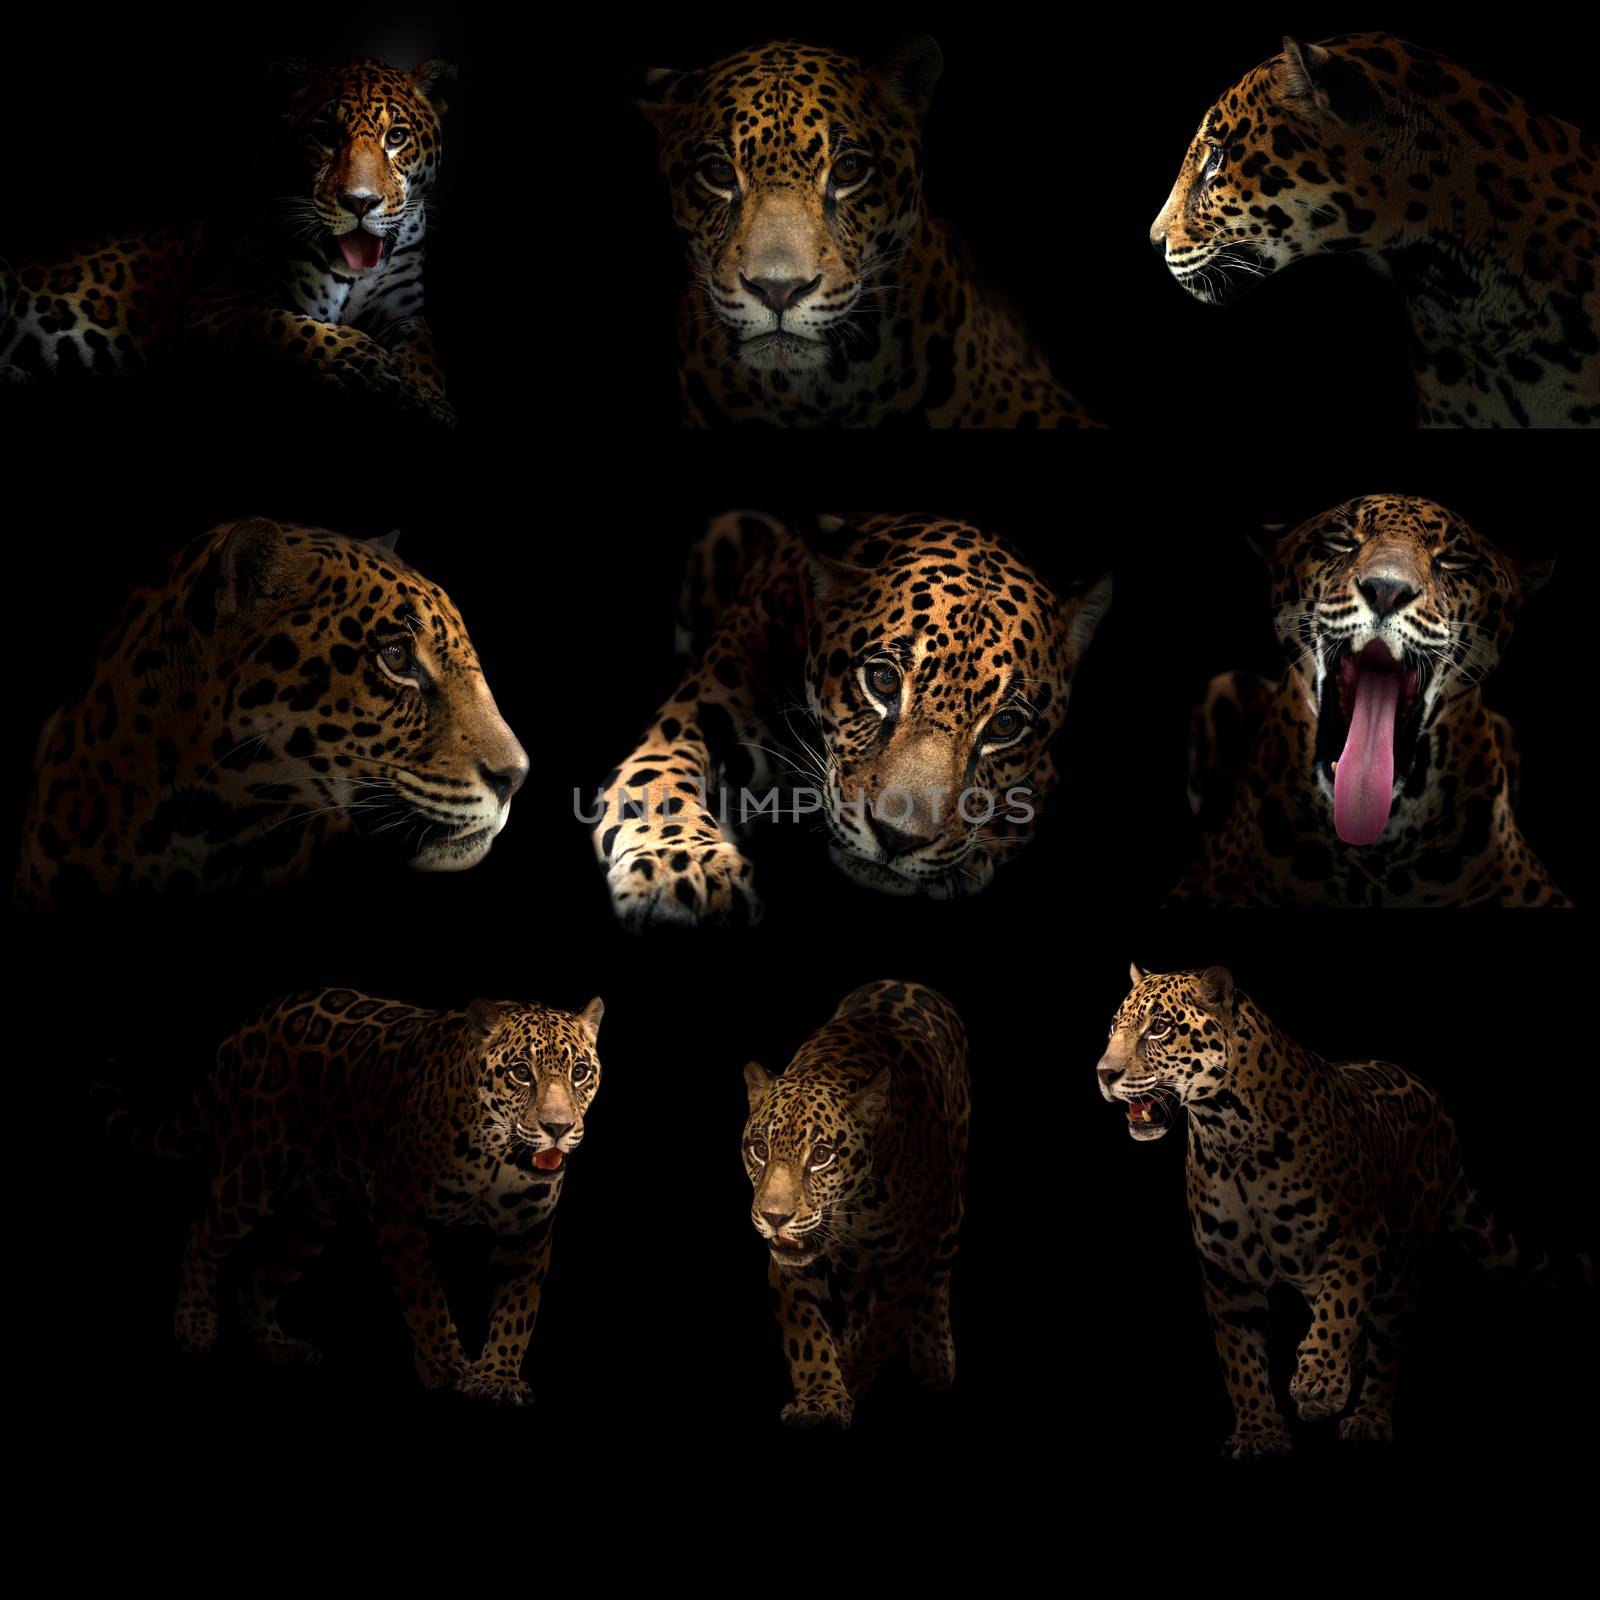 jaguar ( panthera onca ) in the dark  by anankkml